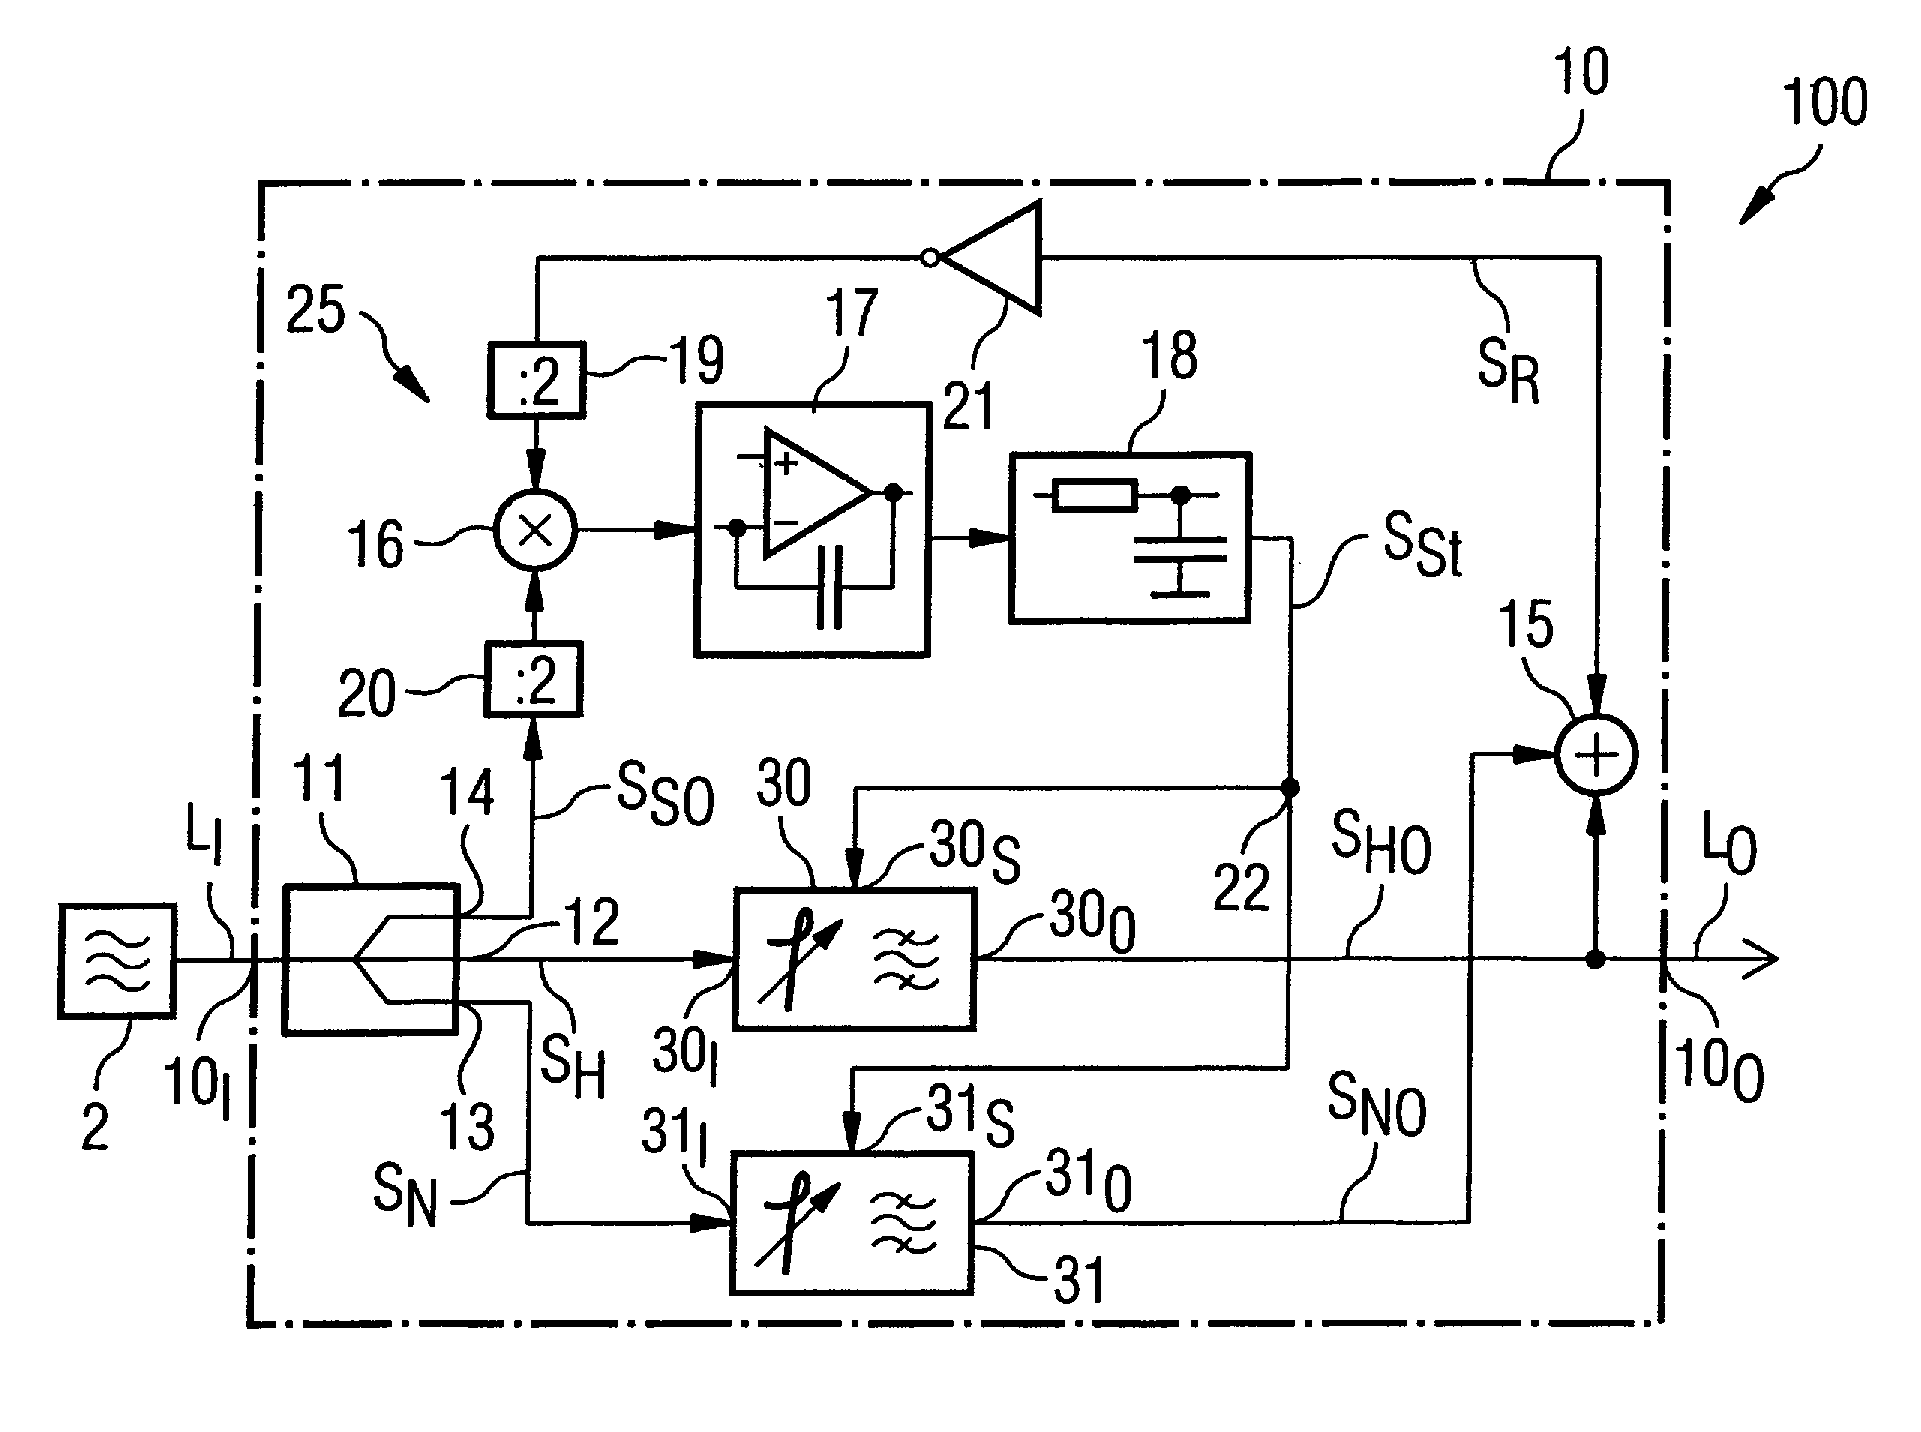 Filter circuit arrangement